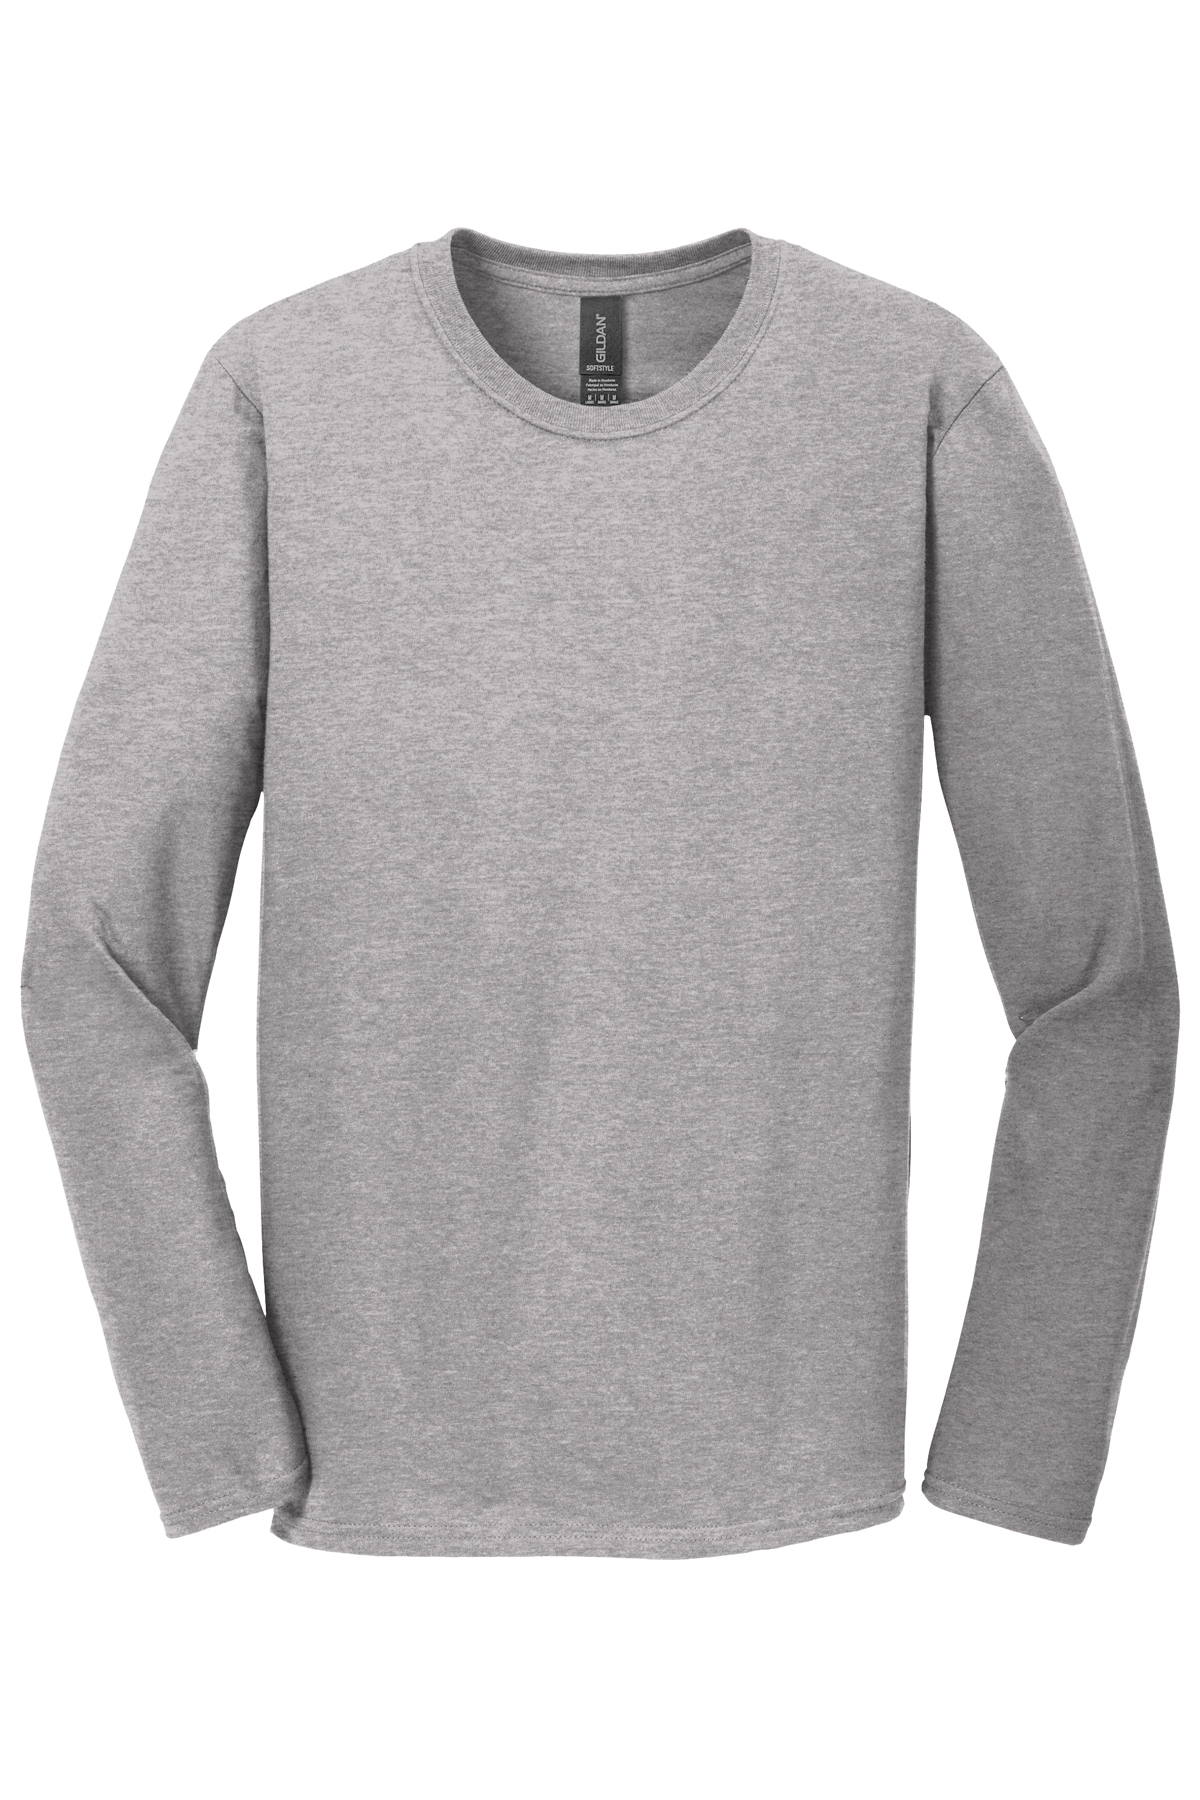 Gildan Softstyle Long Sleeve T-Shirt, Product